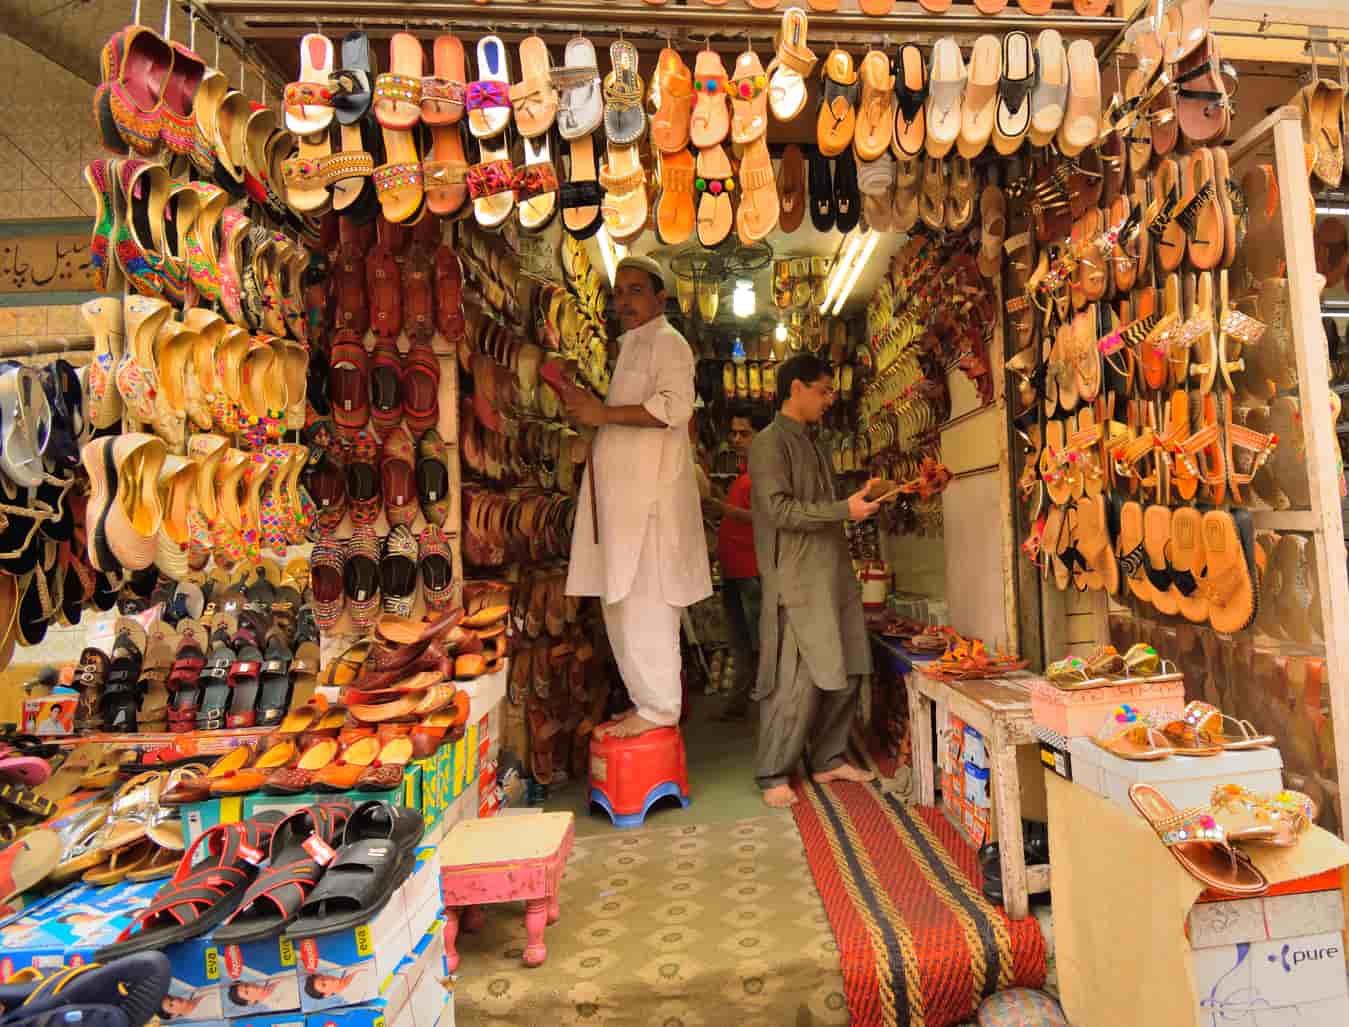 Vendors in a shoe stall in New Delhi